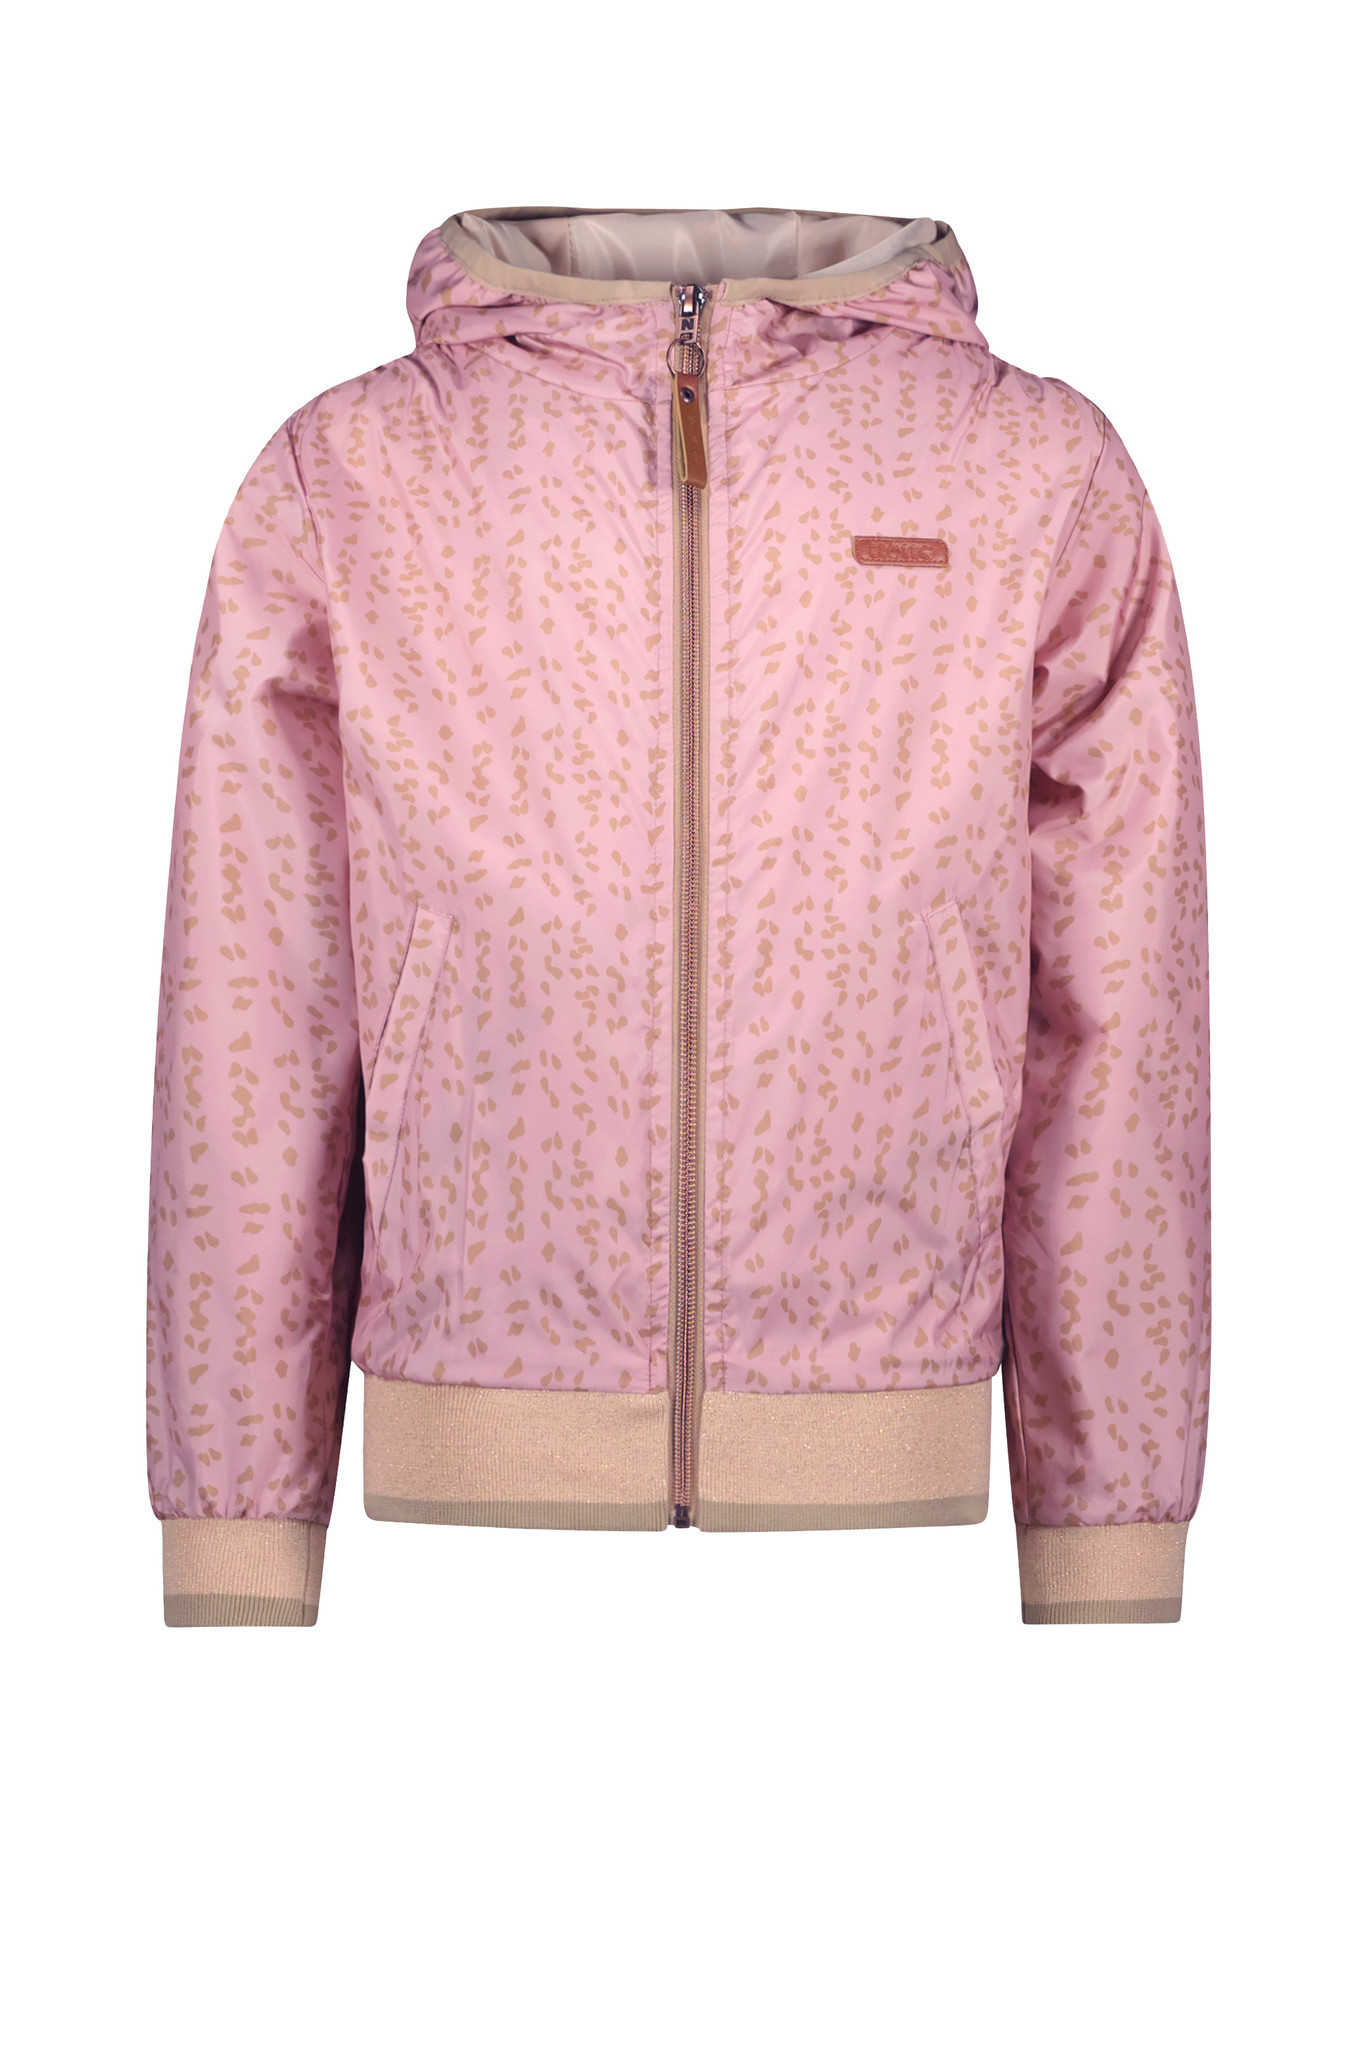 Basistheorie Plantage Respectievelijk NoNo - Meisjes zomerjas met capuchon - Becky - Vintage roze -  merkmeisjeskleding.nl